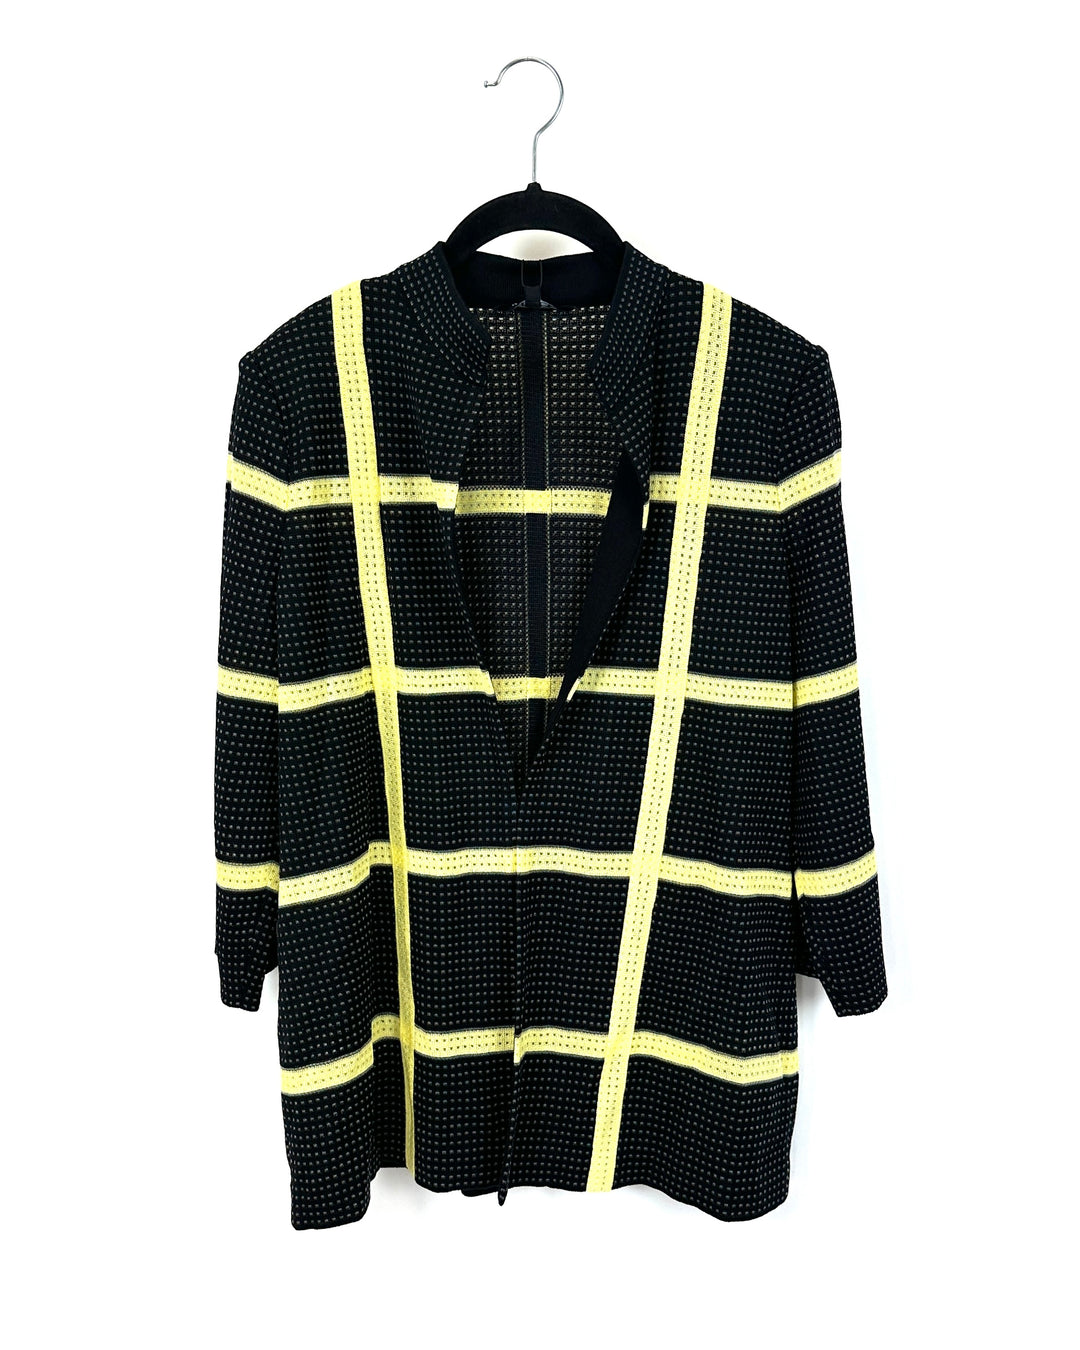 Black And Yellow Plaid Cardigan - Size 2-4